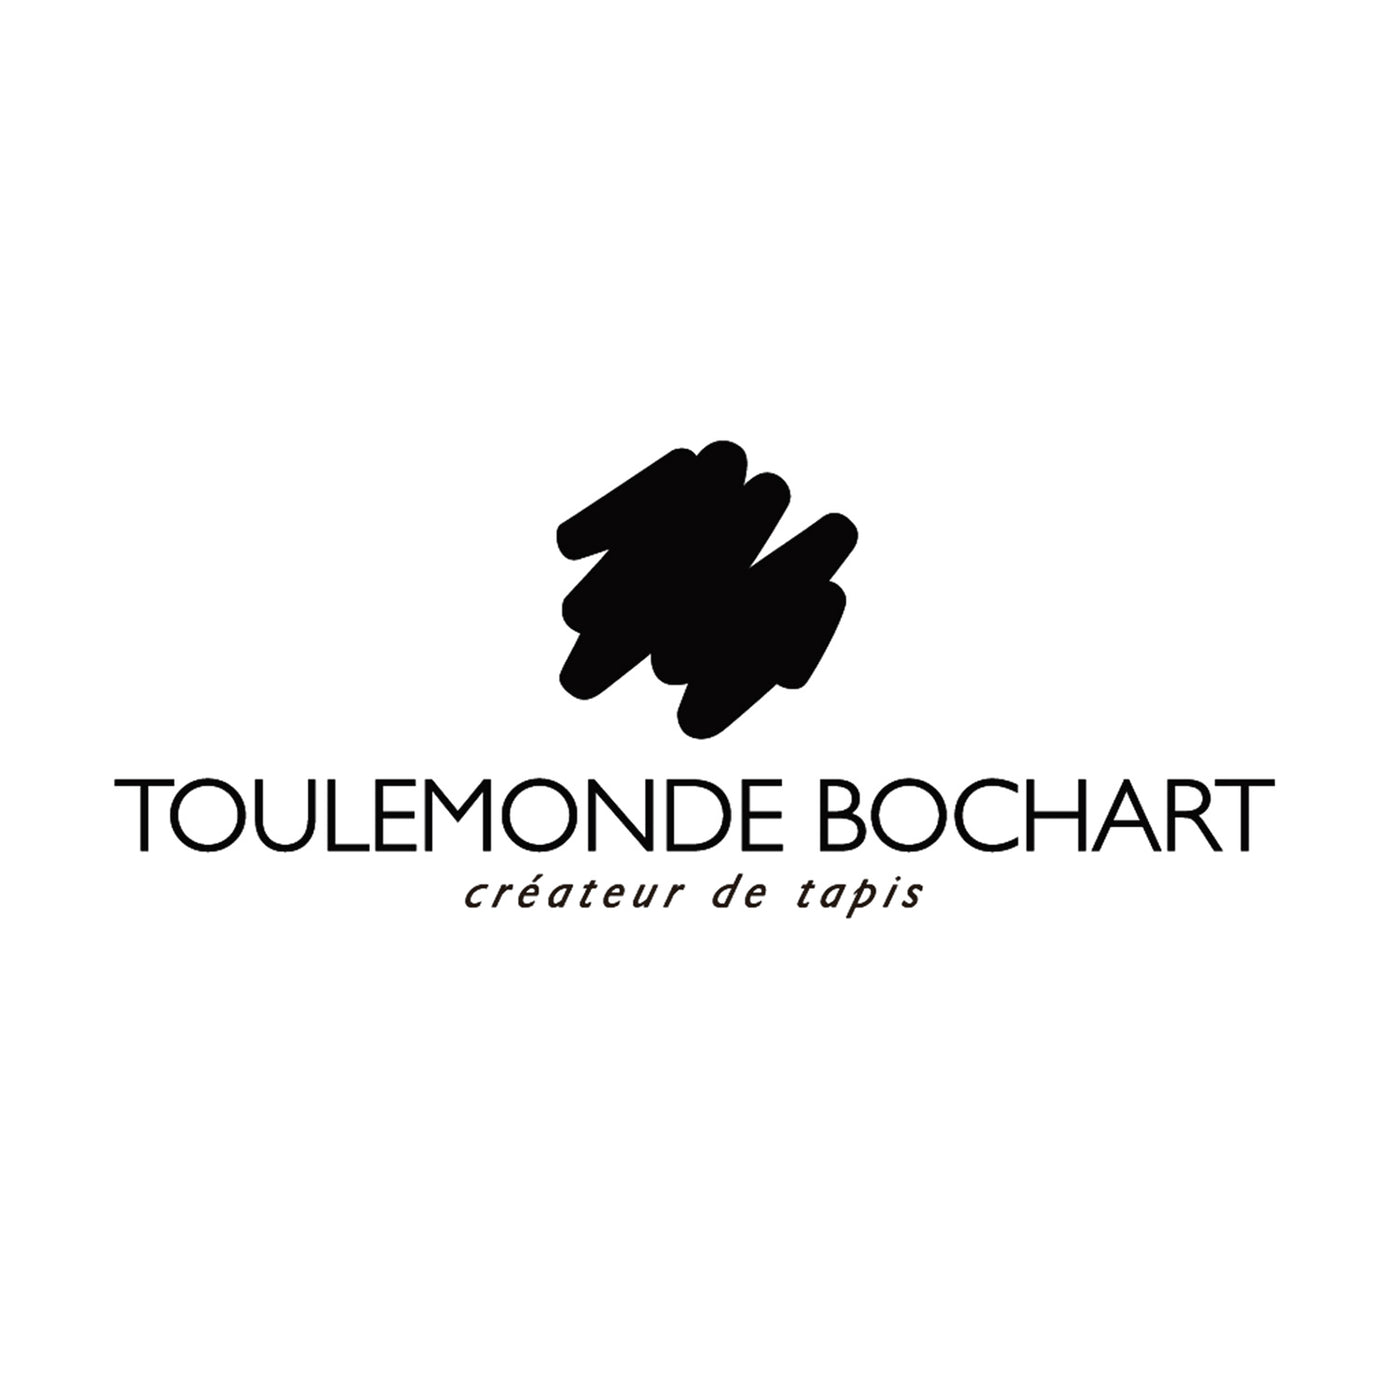 BRAND | Toulemonde Bochart